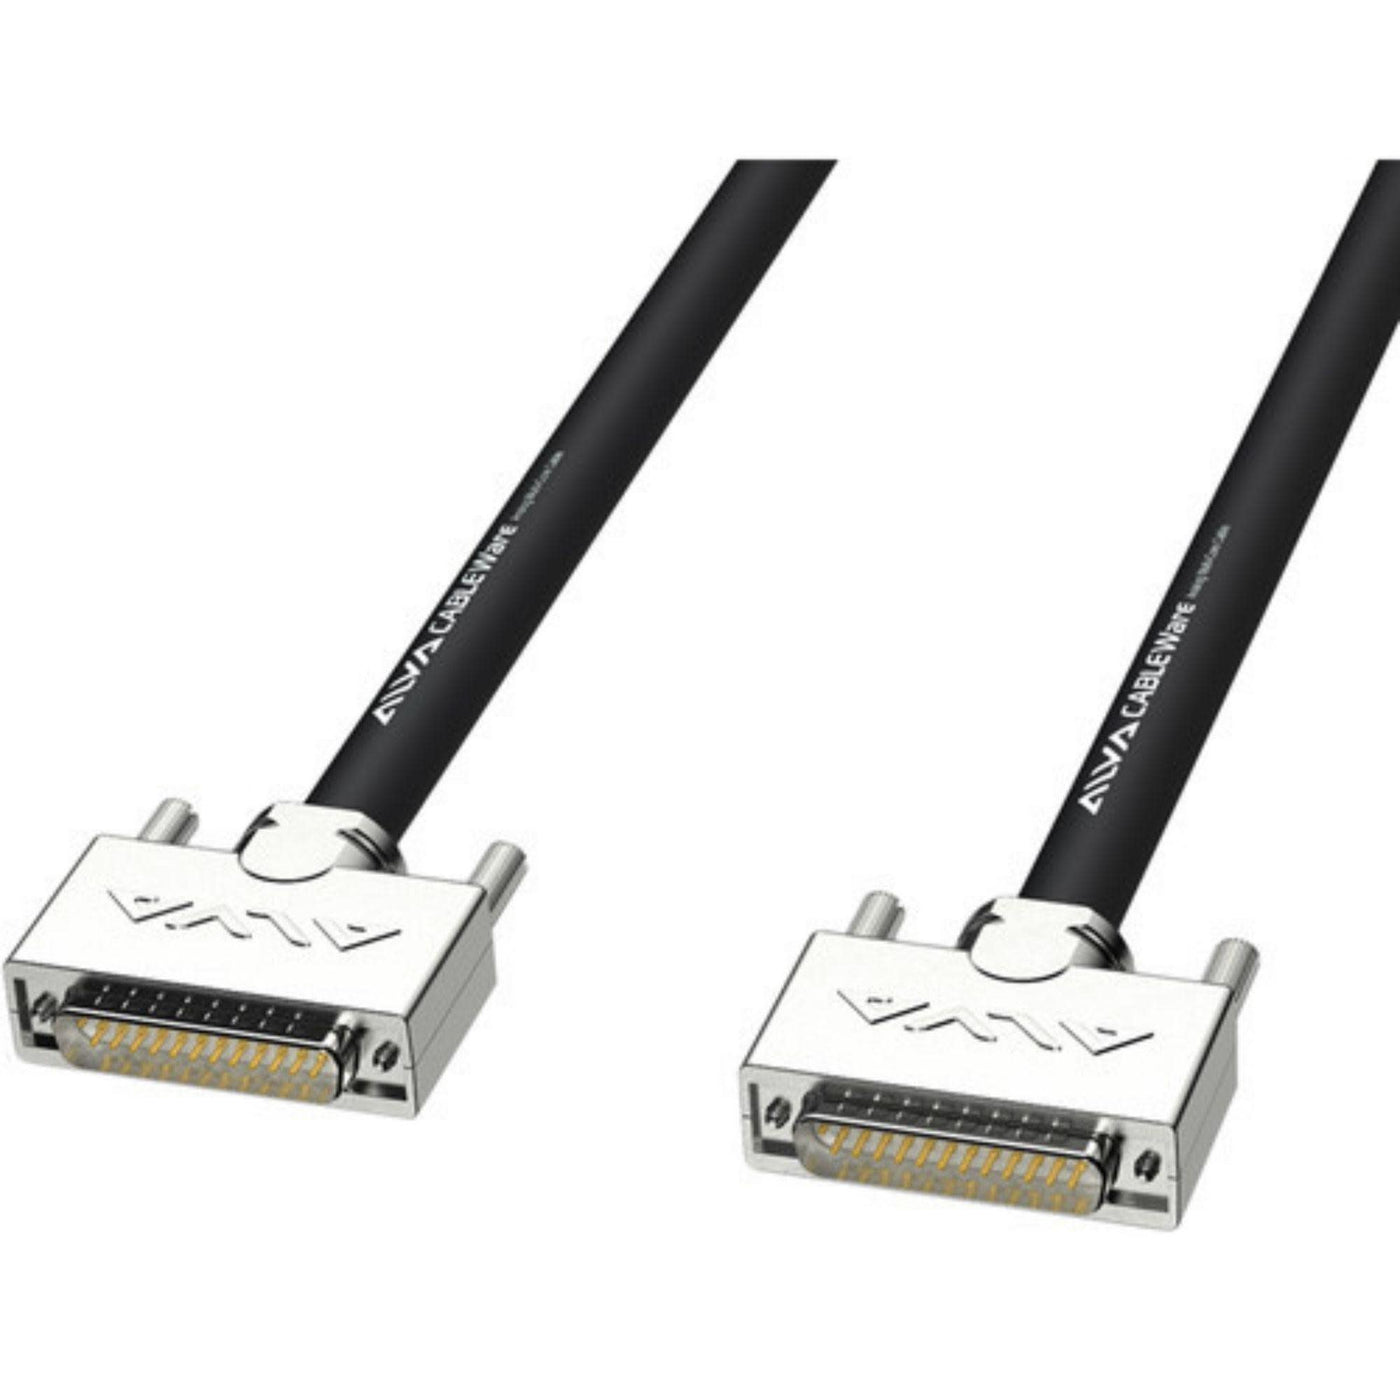 Alva ANA25T25TPRO1 Analog Multi-Core Cable, D-Sub25 Male to D-Sub25 Male, 1m